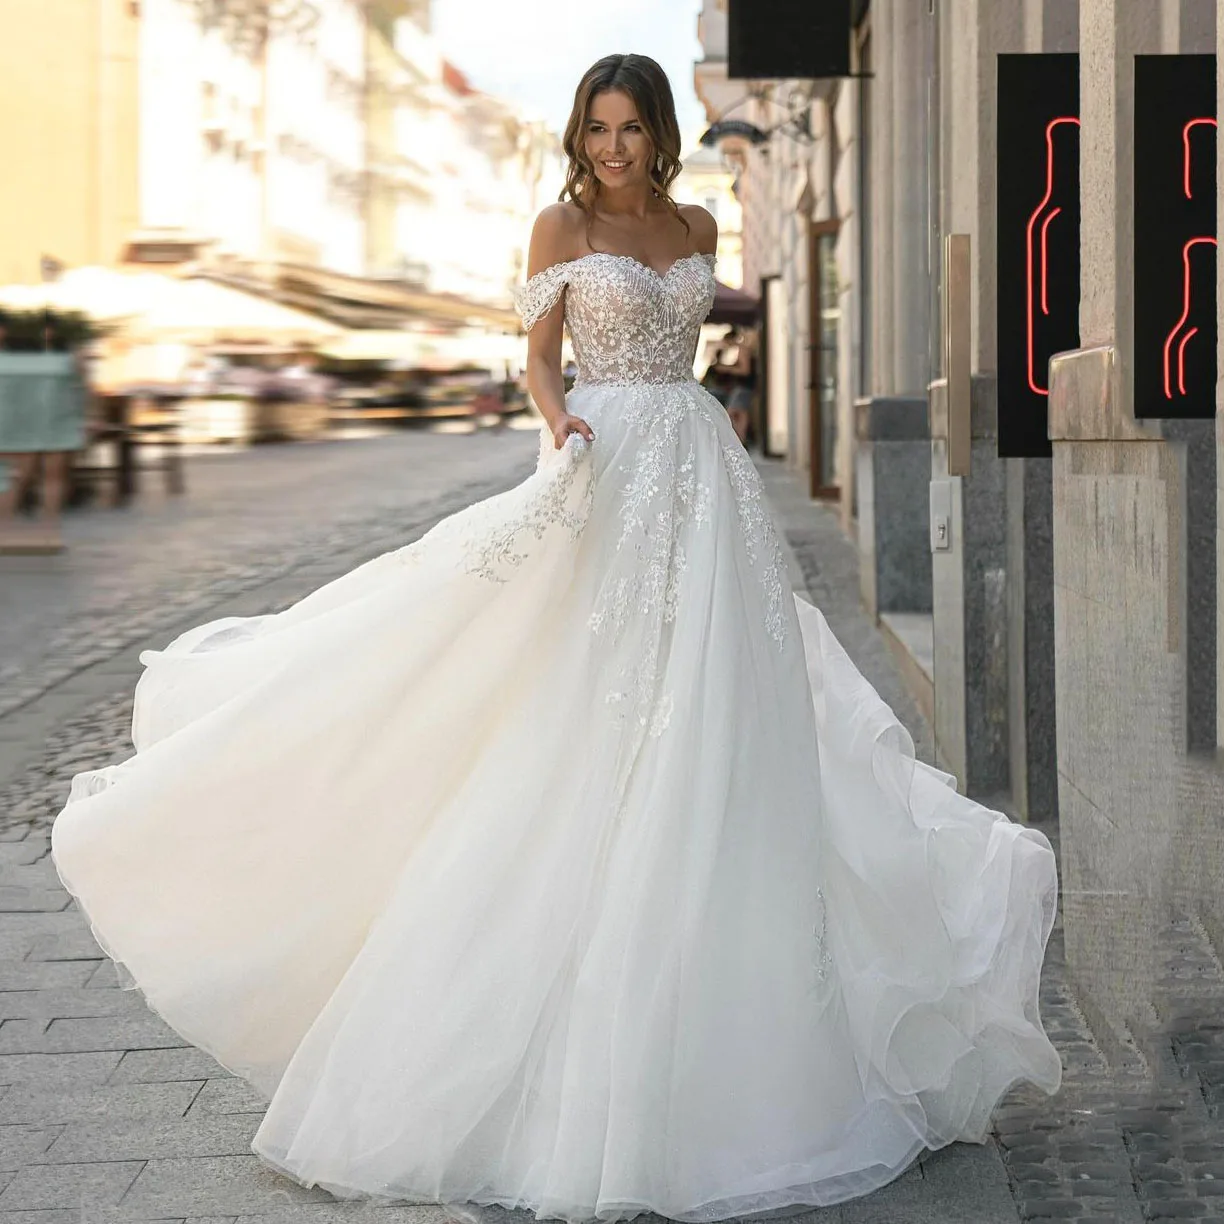 

2022 Aviana Lace Appliqué Sweetheart Wedding Dress For Women A-Line Off The Shoulder Court Train Bridal Gown Vestido De Novia